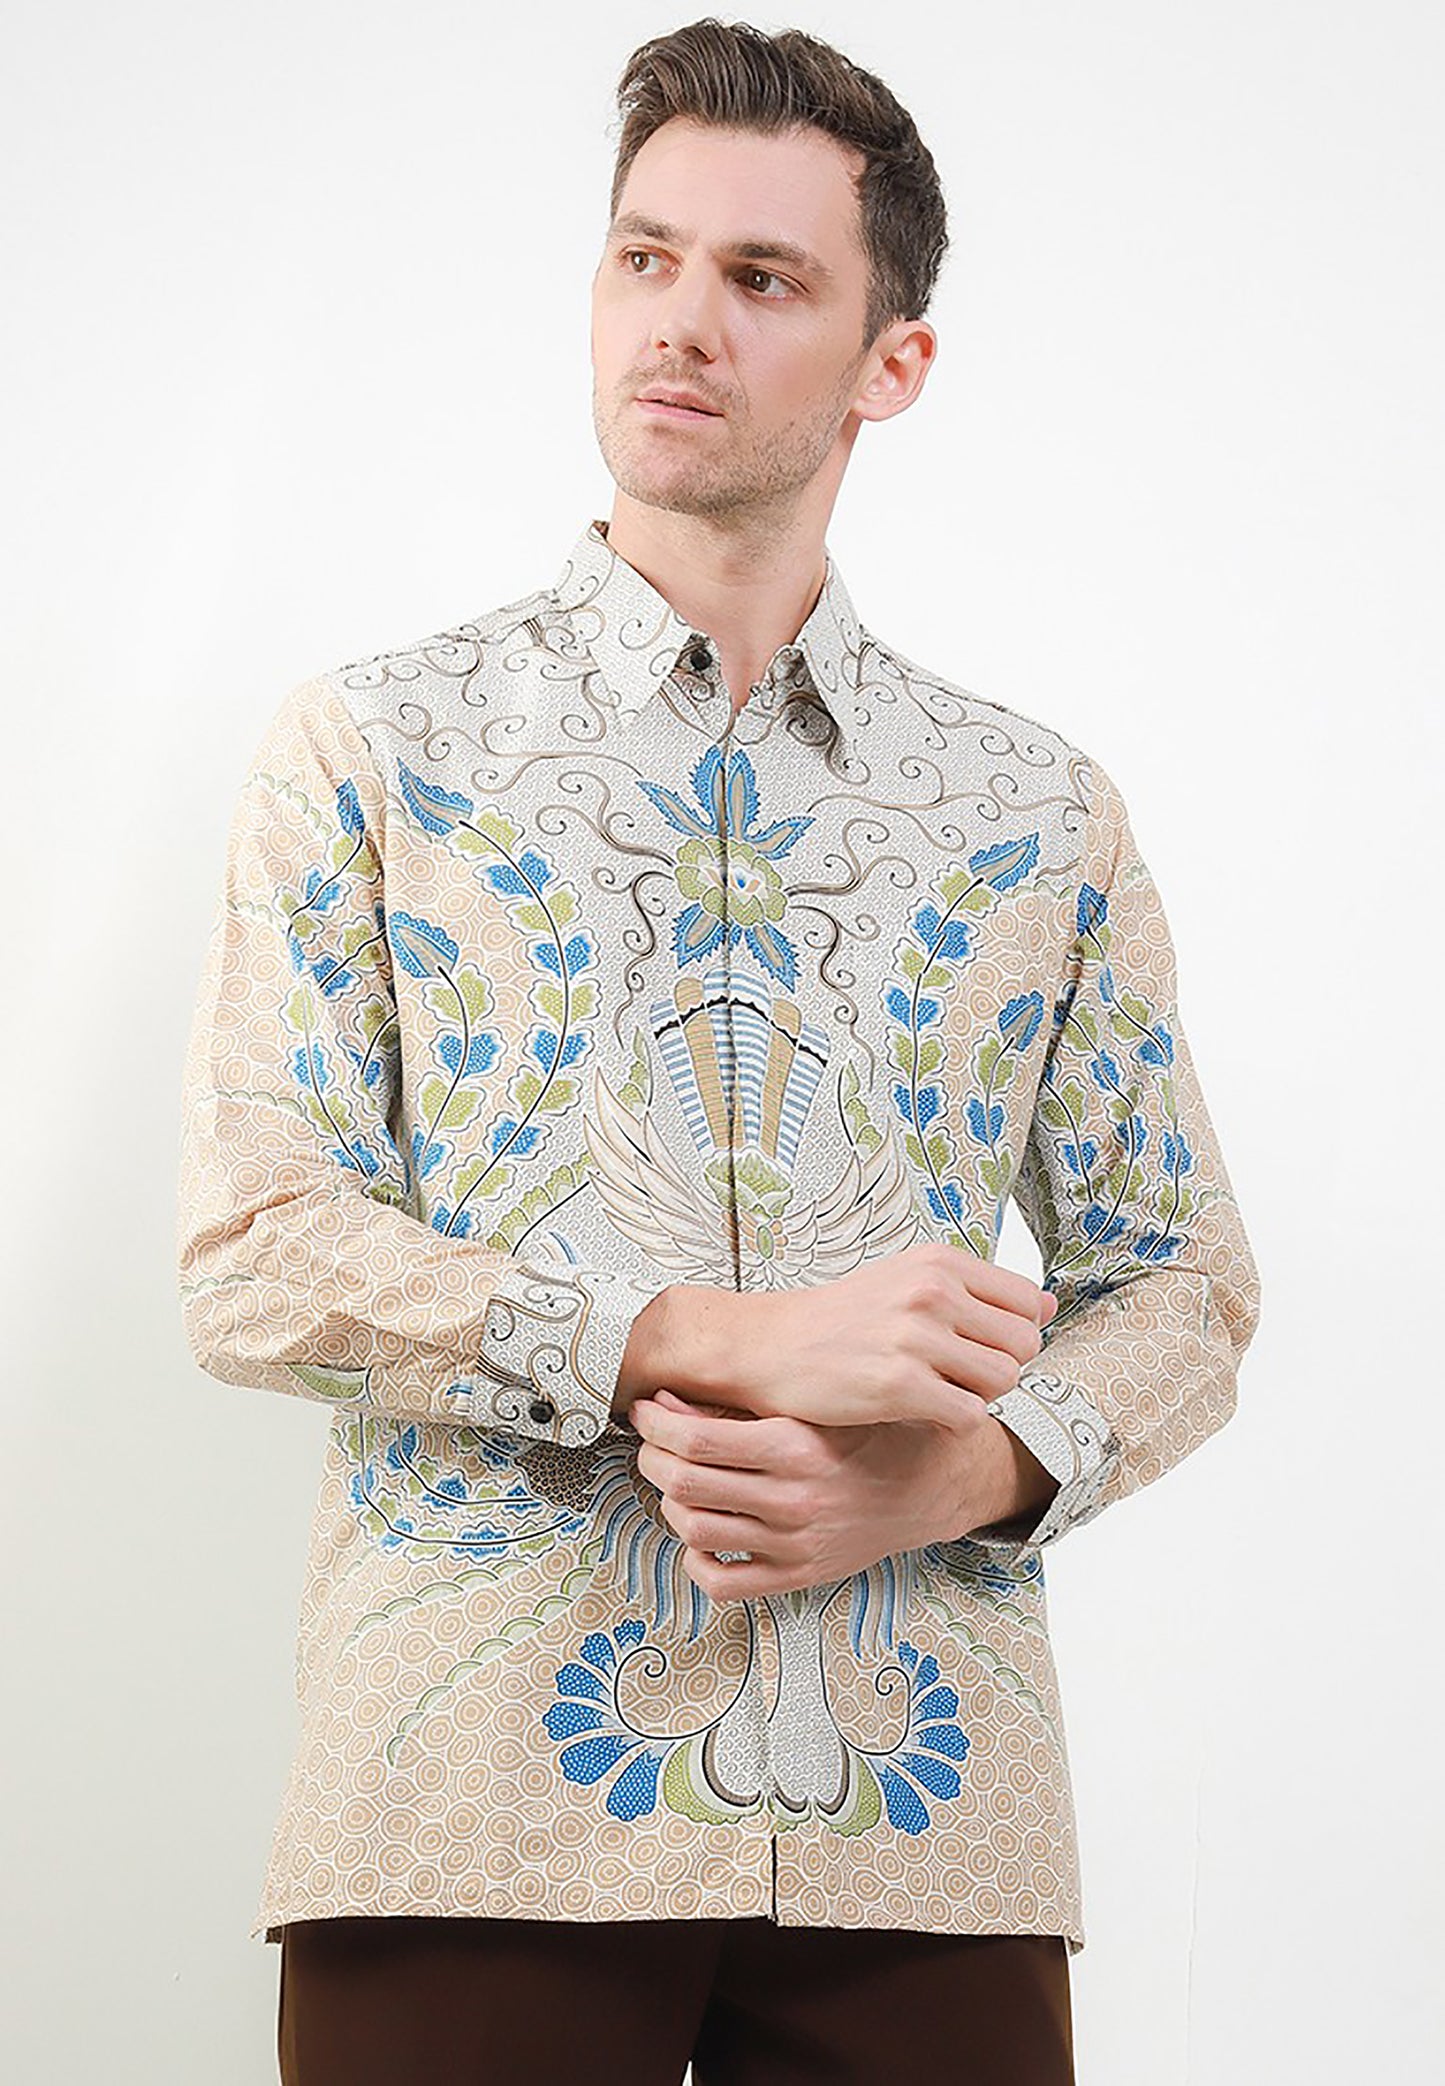 Timeless Elegance Arjuna Weda Men's Batik Shirt with Modern Pattern, Men Batik, Batik, Men Batik Shirt, Men's Batik Shirts